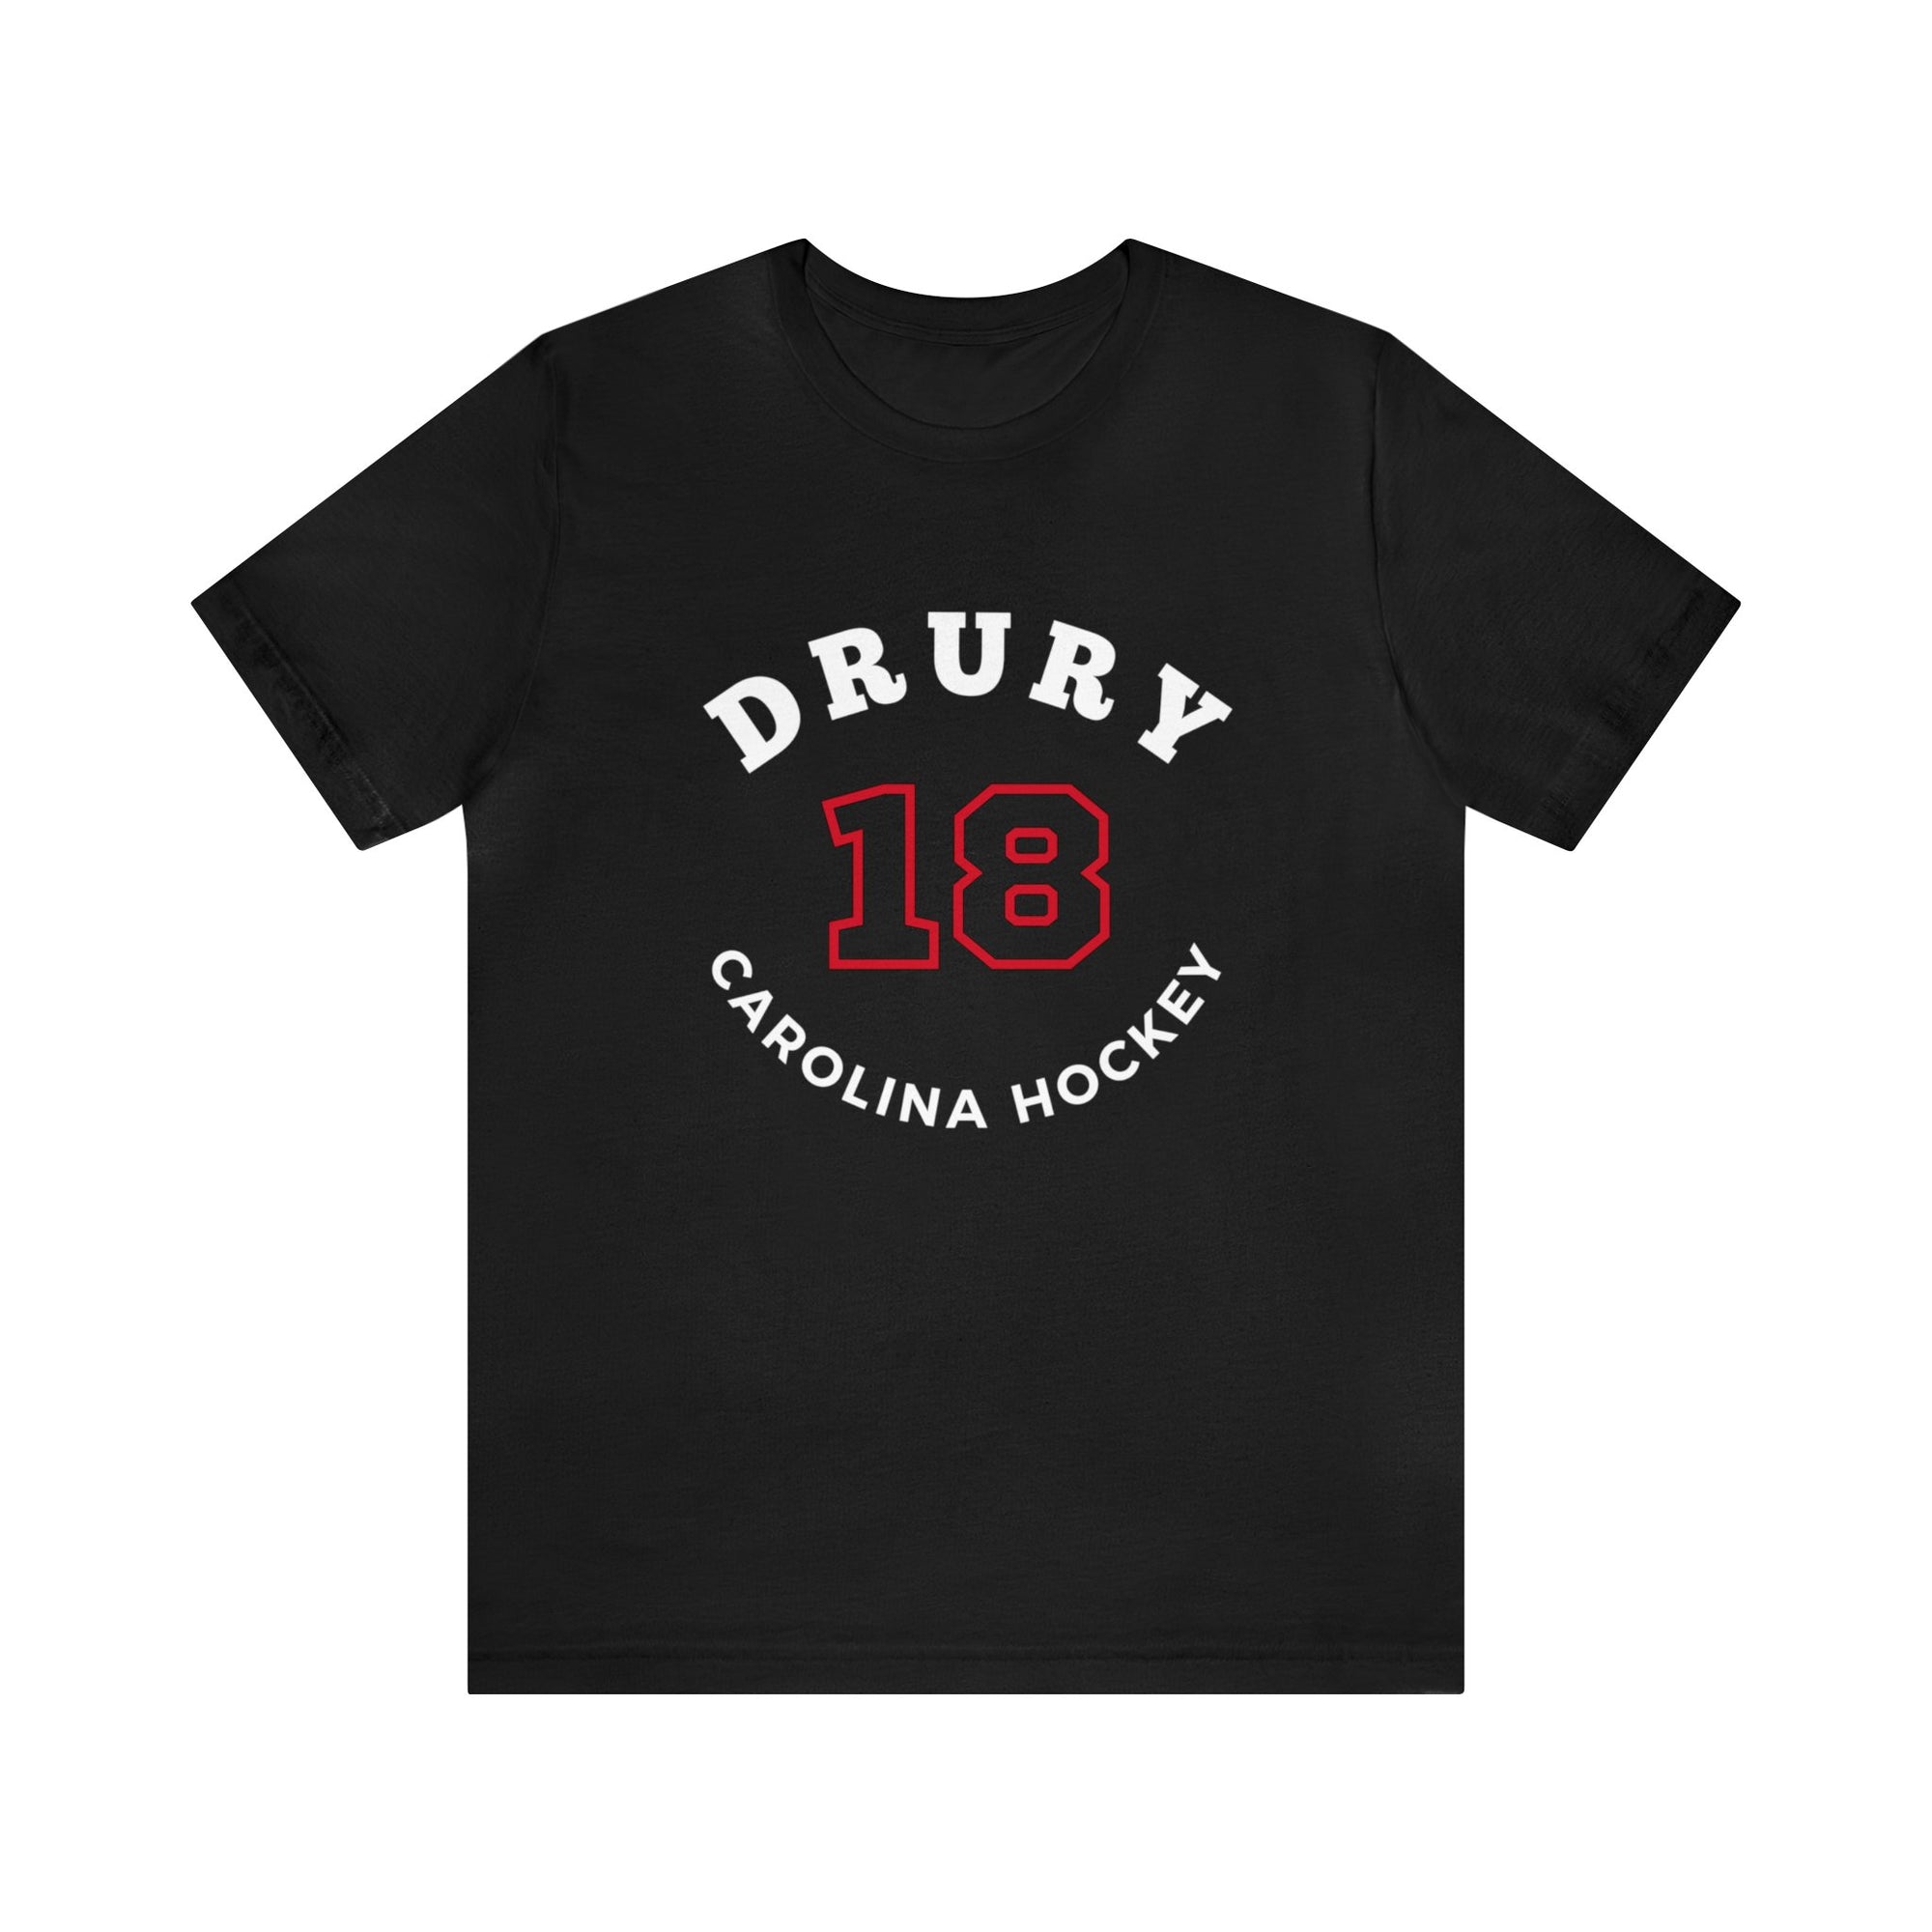 Drury 18 Carolina Hockey Number Arch Design Unisex T-Shirt